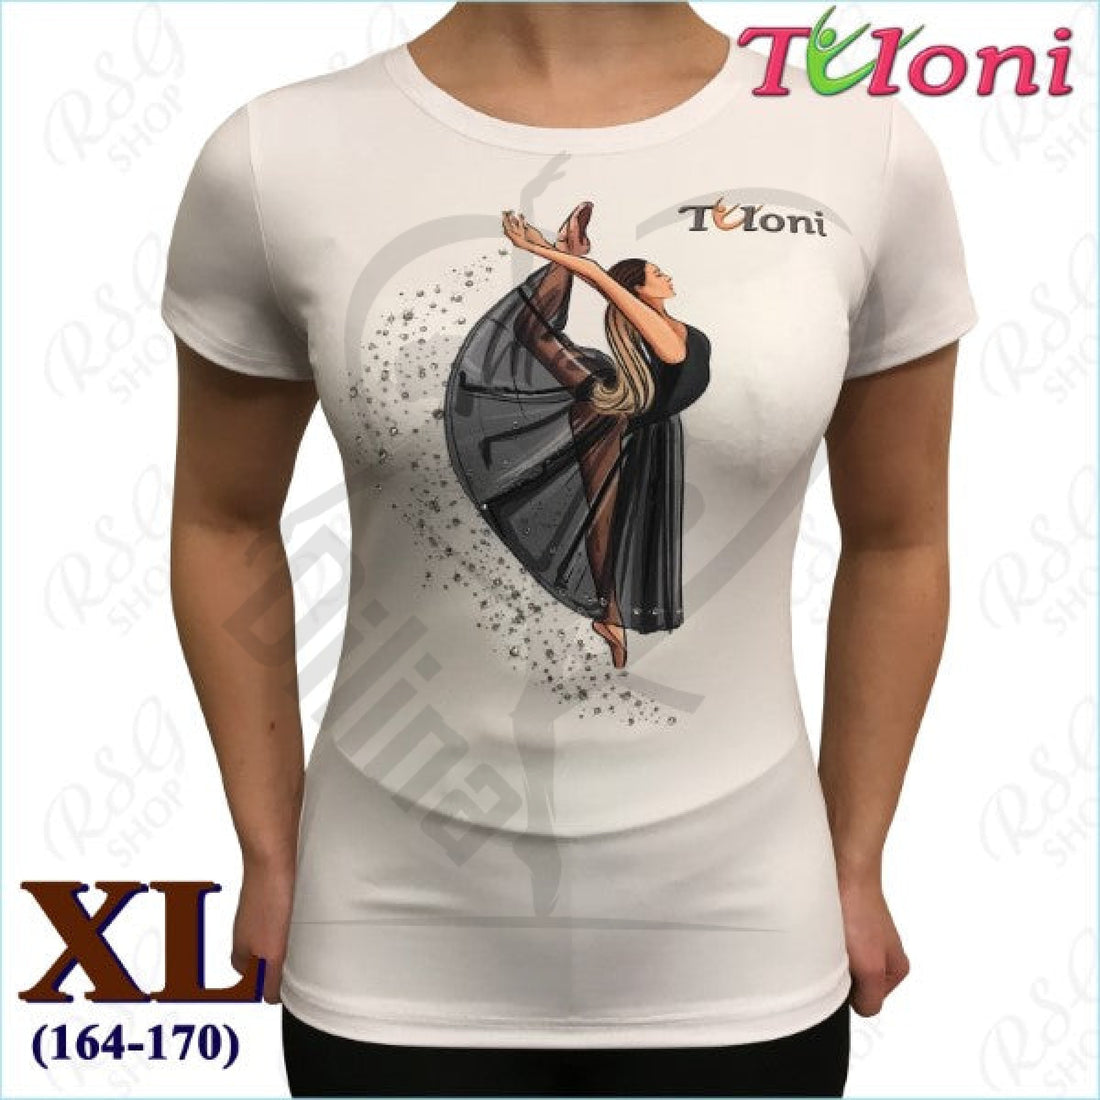 Tuloni White T-Shirt Mod. Ballet Xl (164-170) T Shirts & Tops